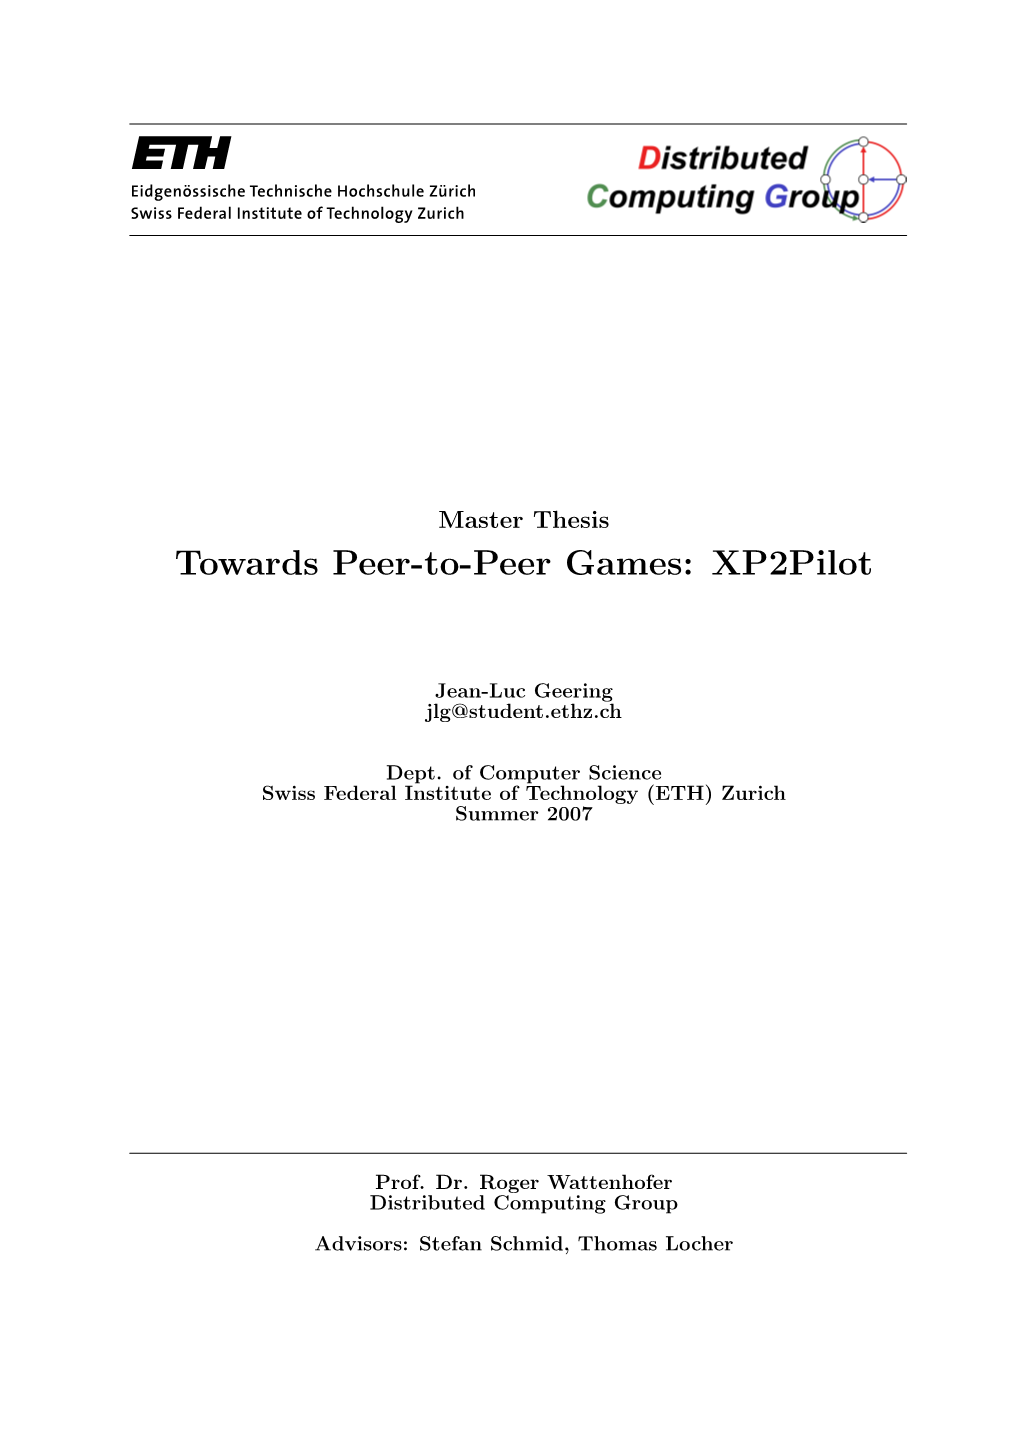 Towards Peer-To-Peer Games: Xp2pilot